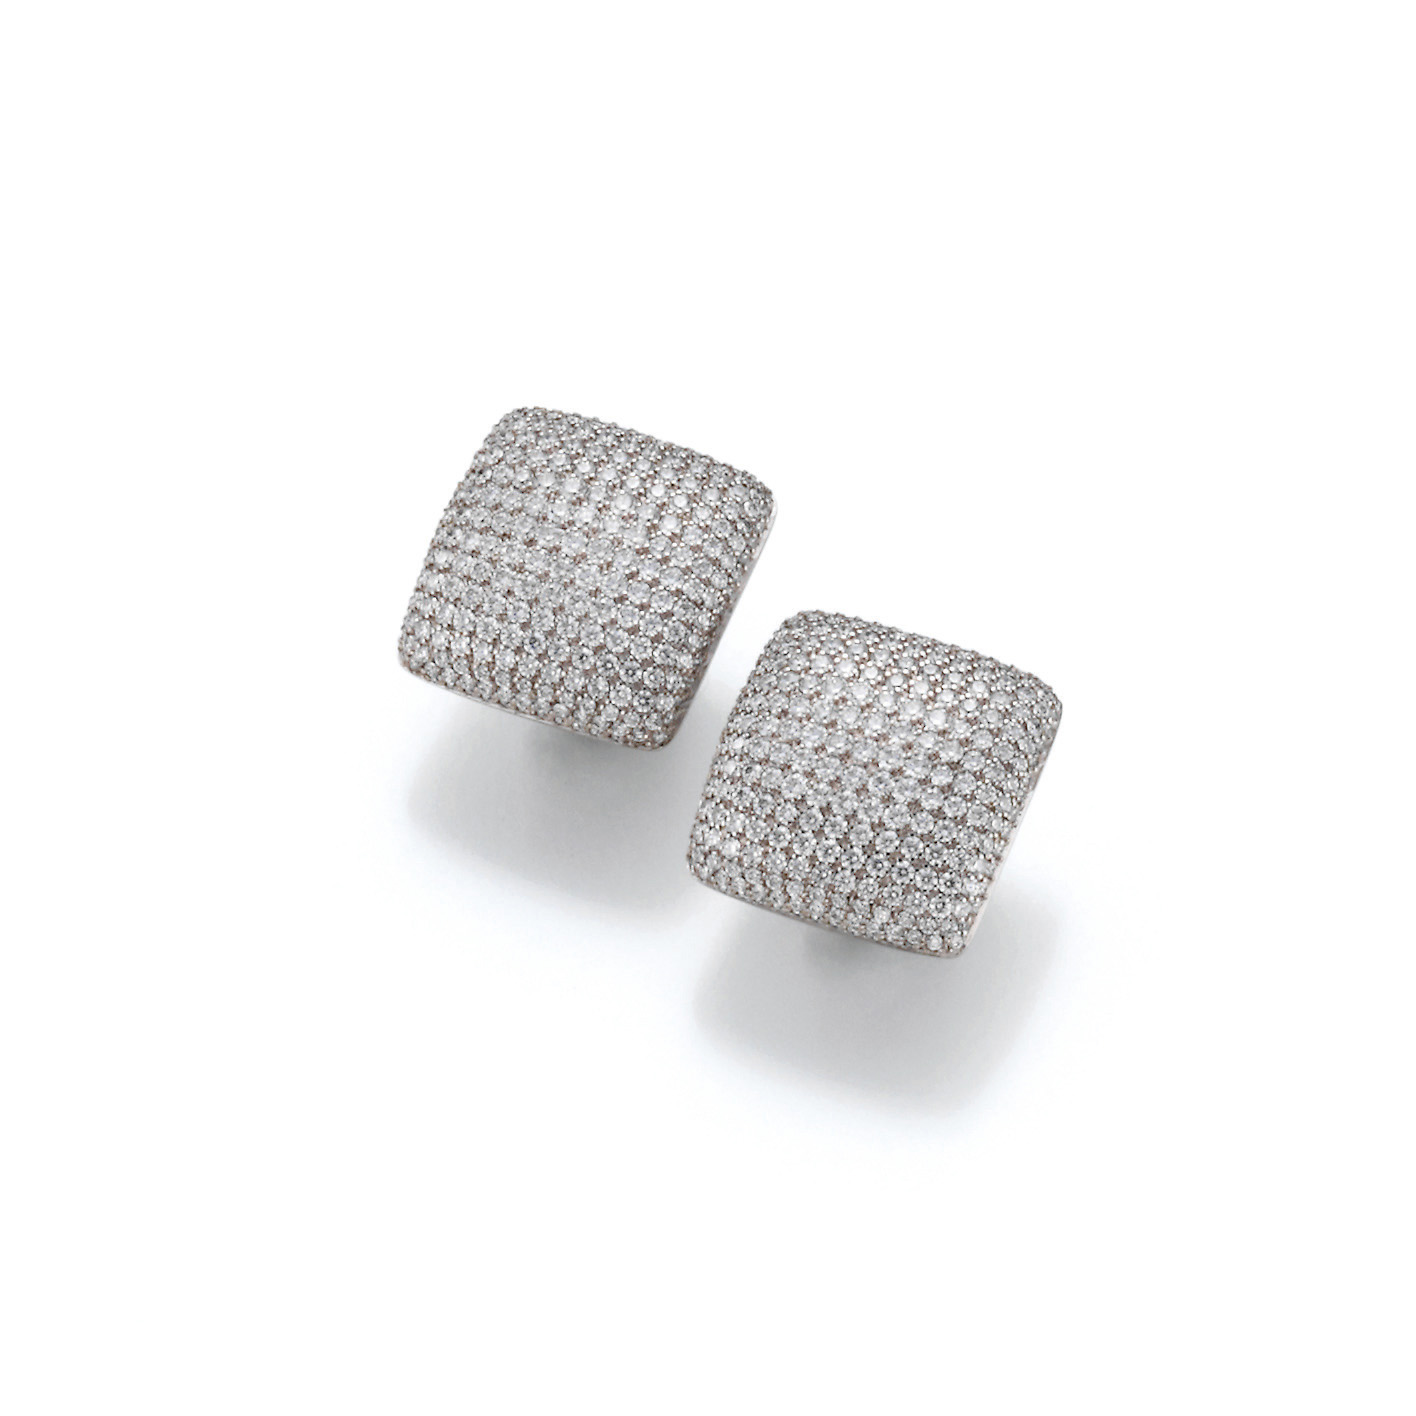 Wholesale OEM/ODM Jewelry Silver cz earrings zircon jewelry manufacturers